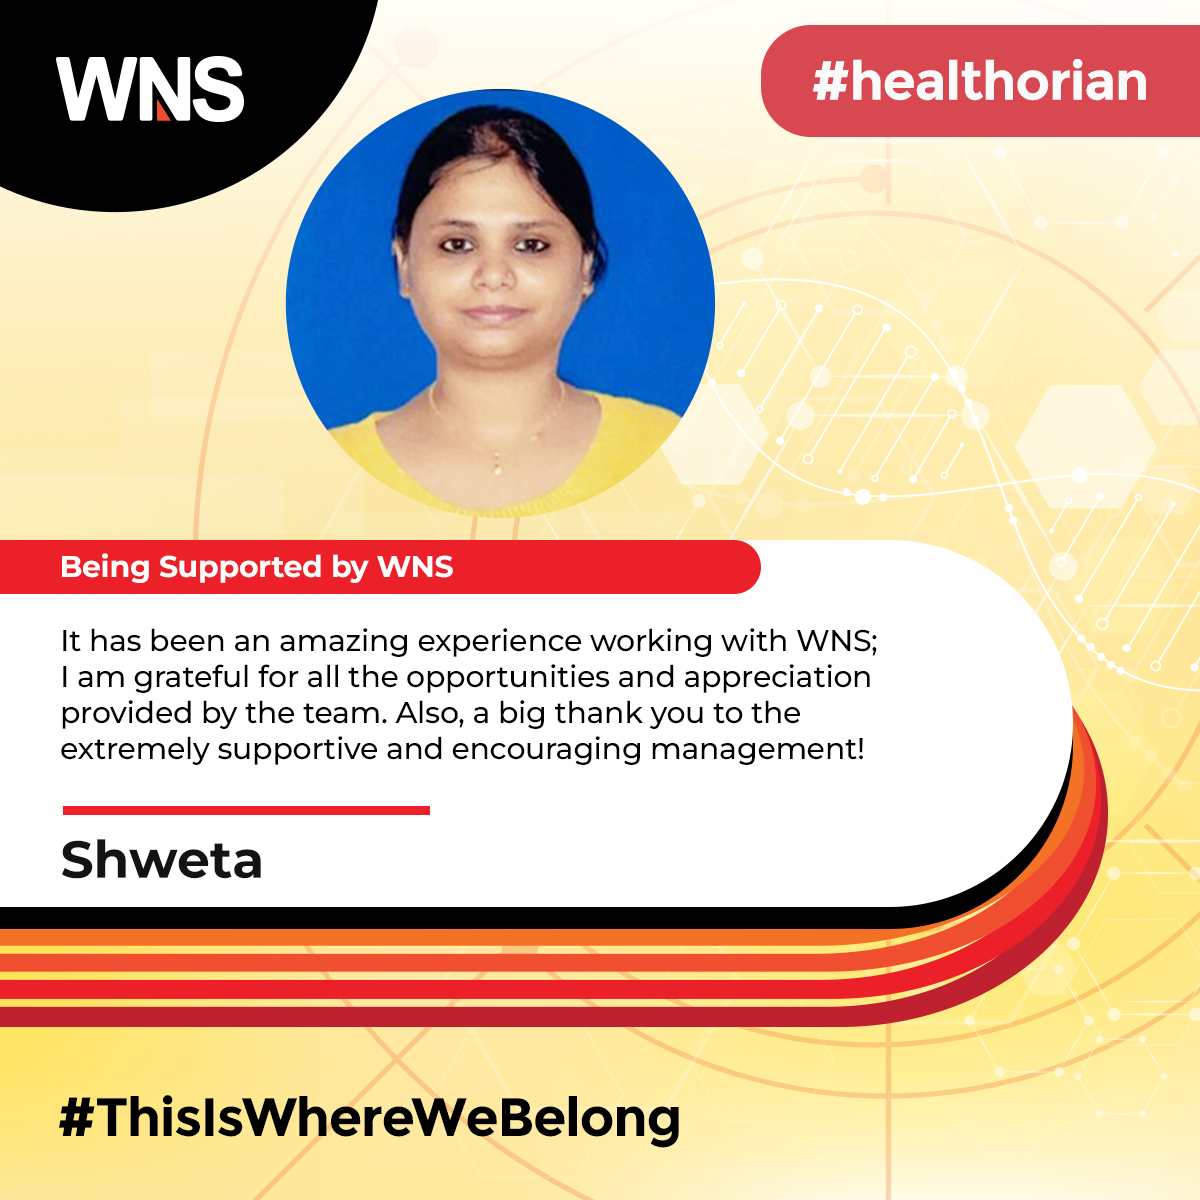 Read the full story of #WNSer Shweta here. #healthorian #ThisIsWhereWeBelong